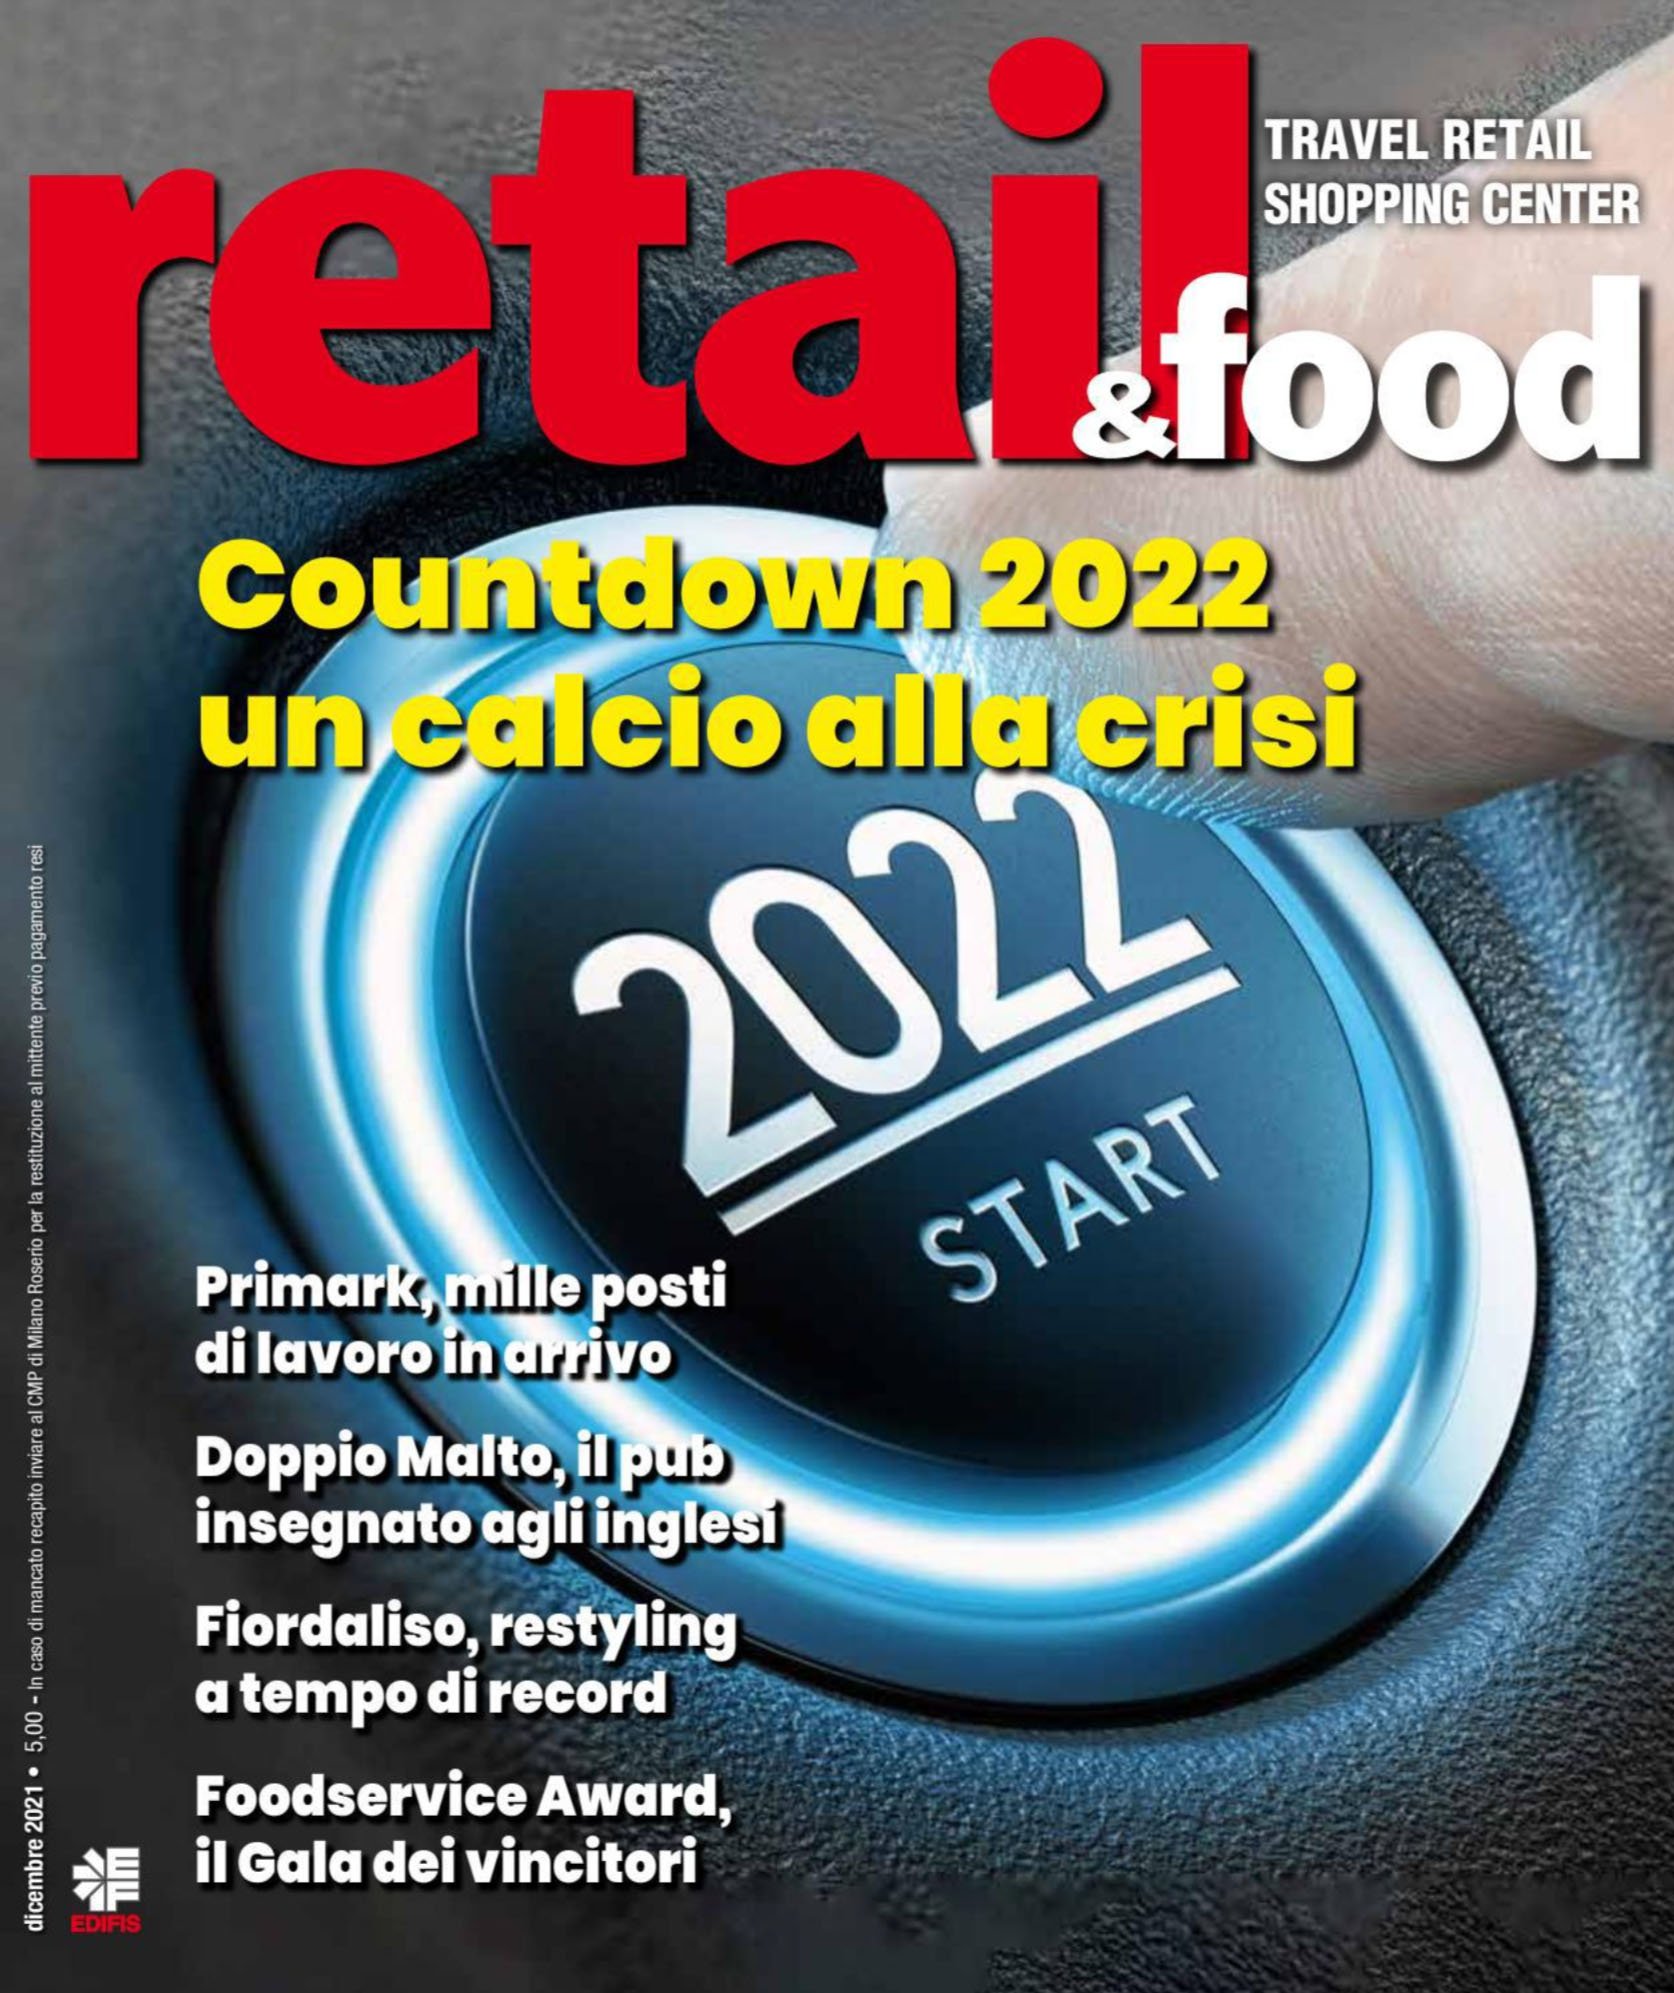 Die Kollektion Celeste im Magazin Retail & Food